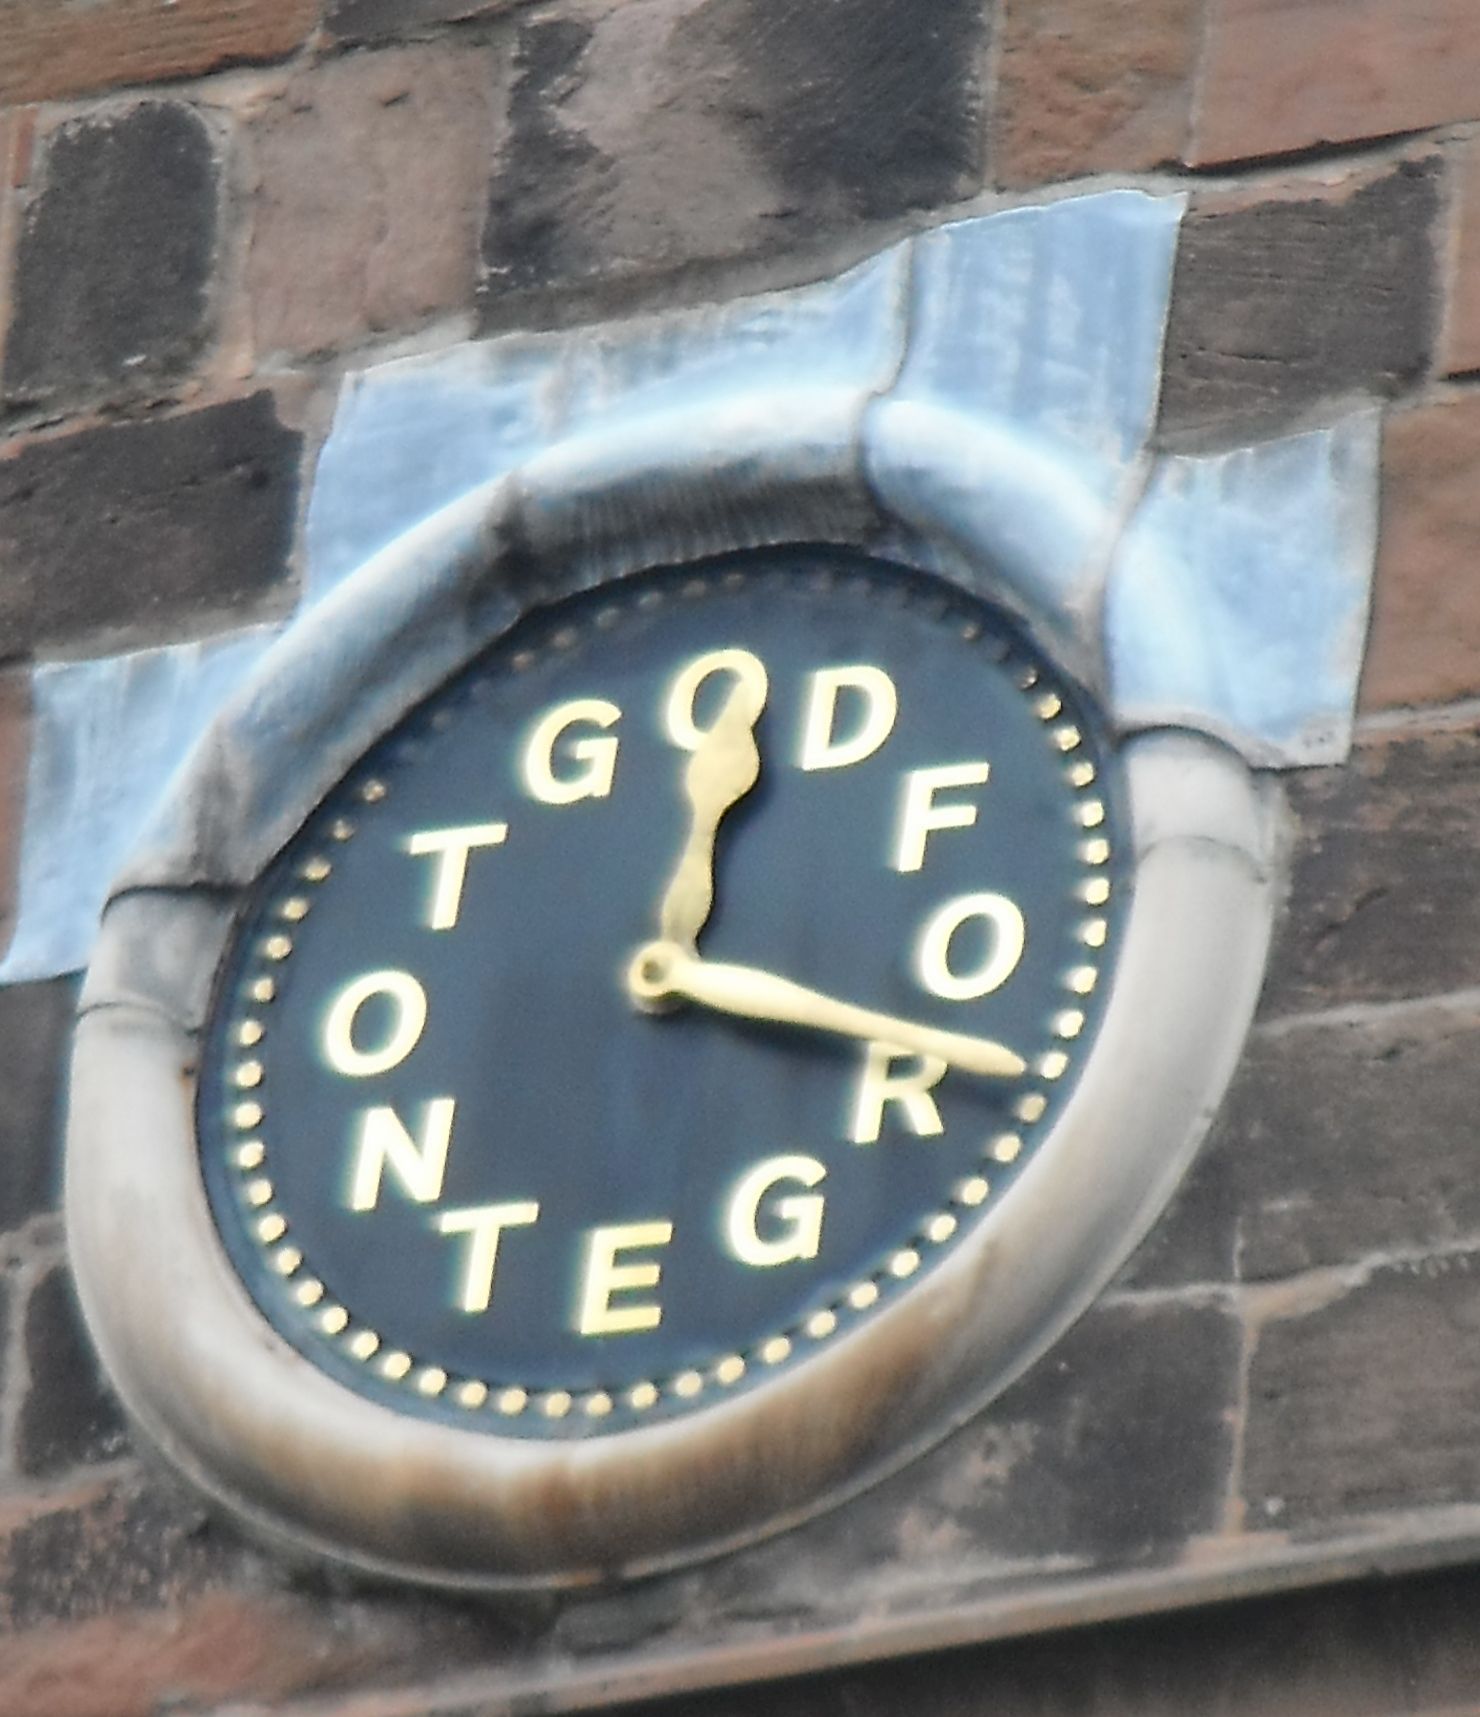 Photo taken by me – Cheadle Parish Church Clock, Stockport, Manchester 